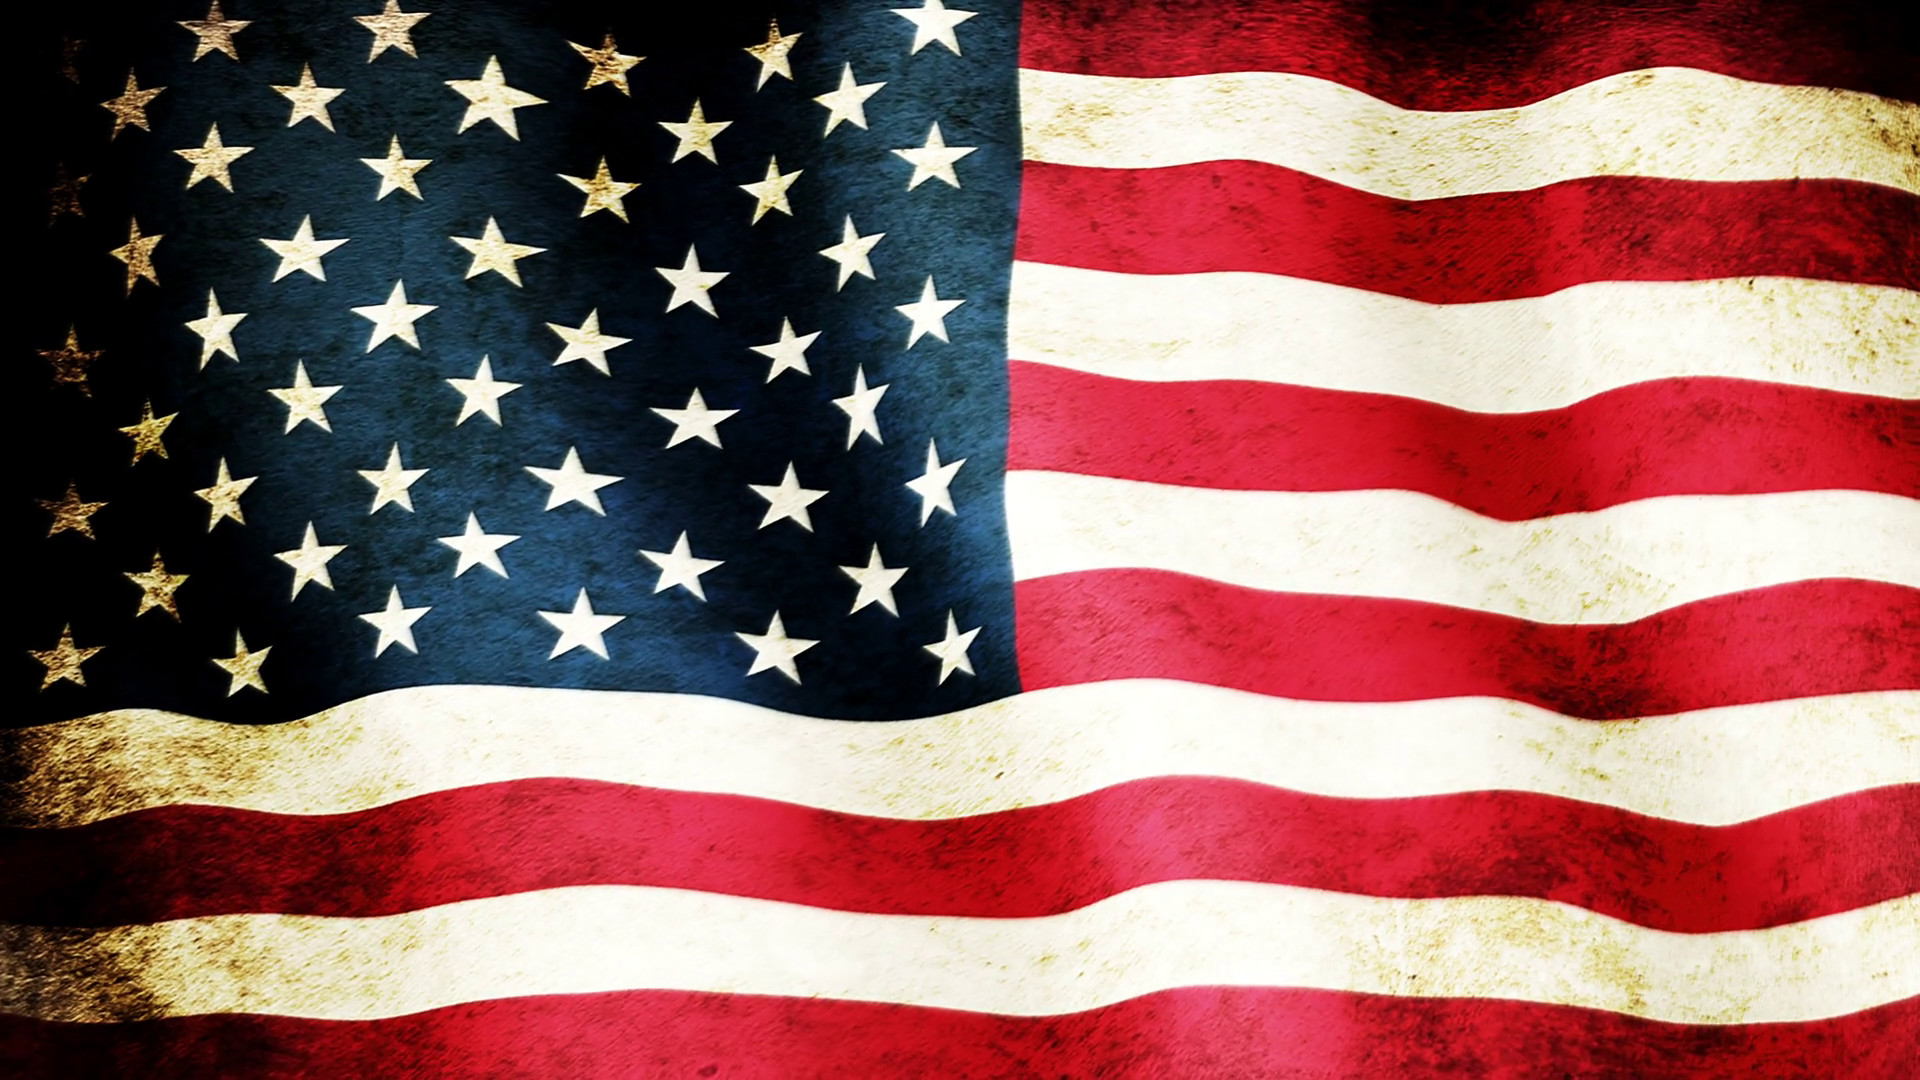 1920x1080 United States of America (USA) Flag - War Background - 4K (3840x2160)